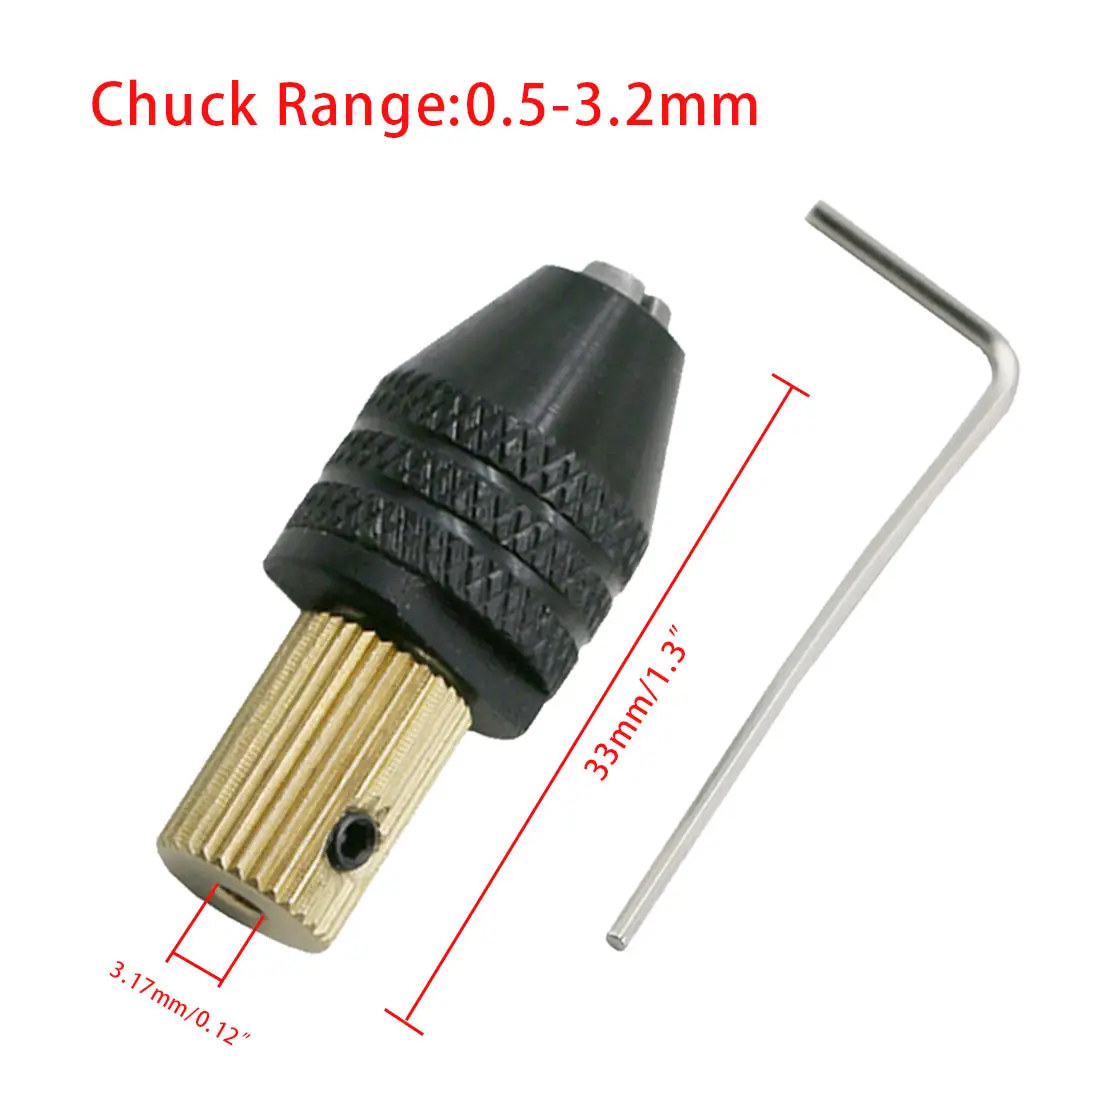 3.17Mm Mini Electronic Drill Chuck Range 0.5-3.2Mm Shank Shaft Adapter Tools Drill Chuck